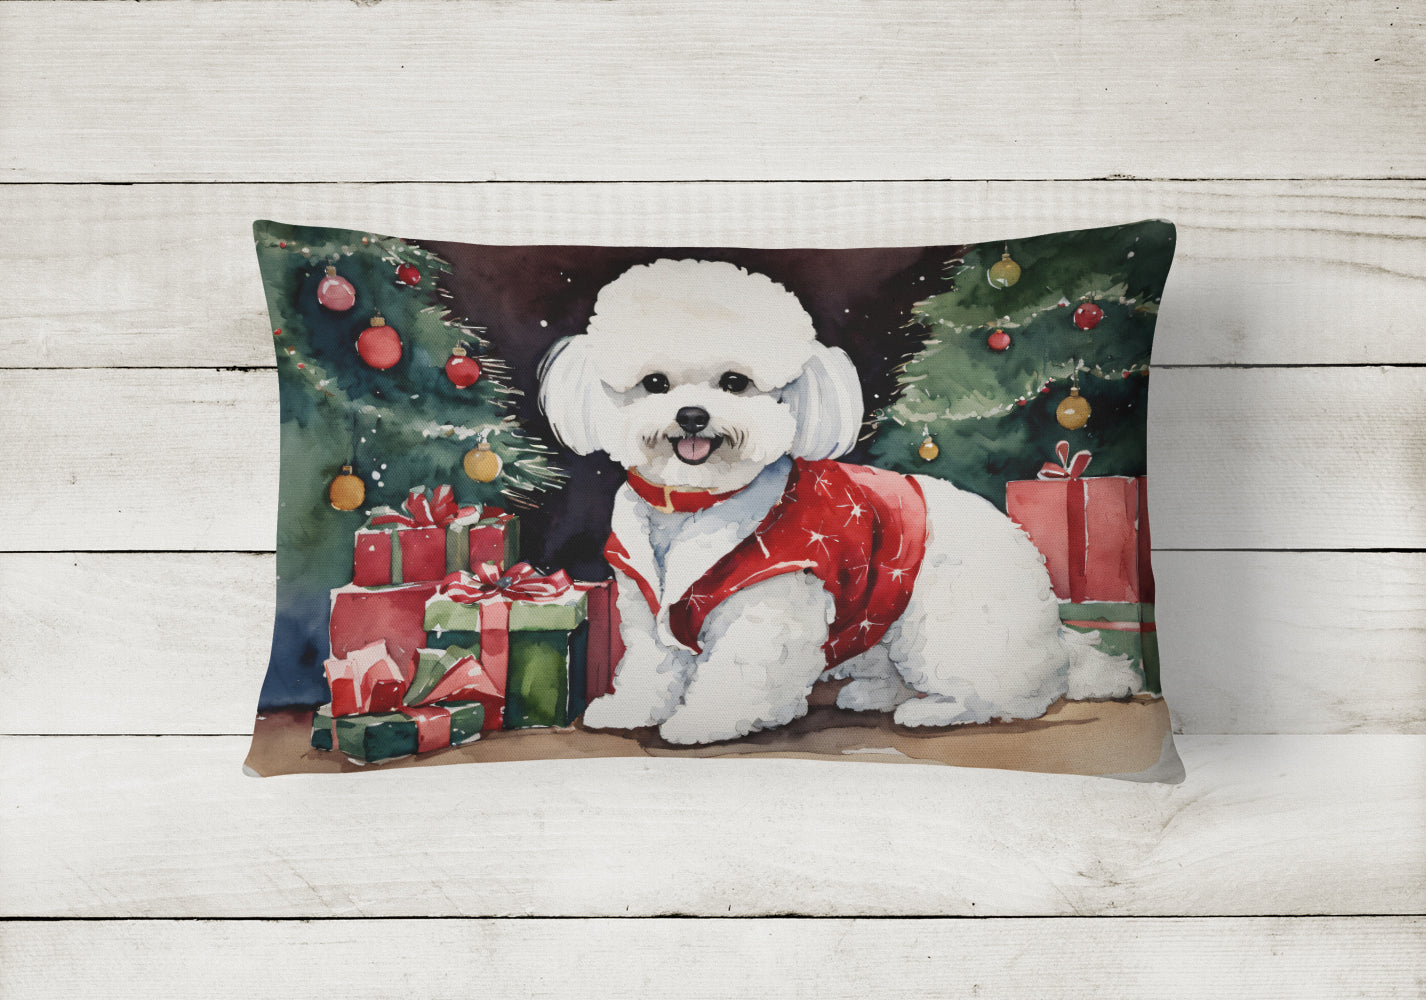 Bichon Frise Christmas Fabric Decorative Pillow